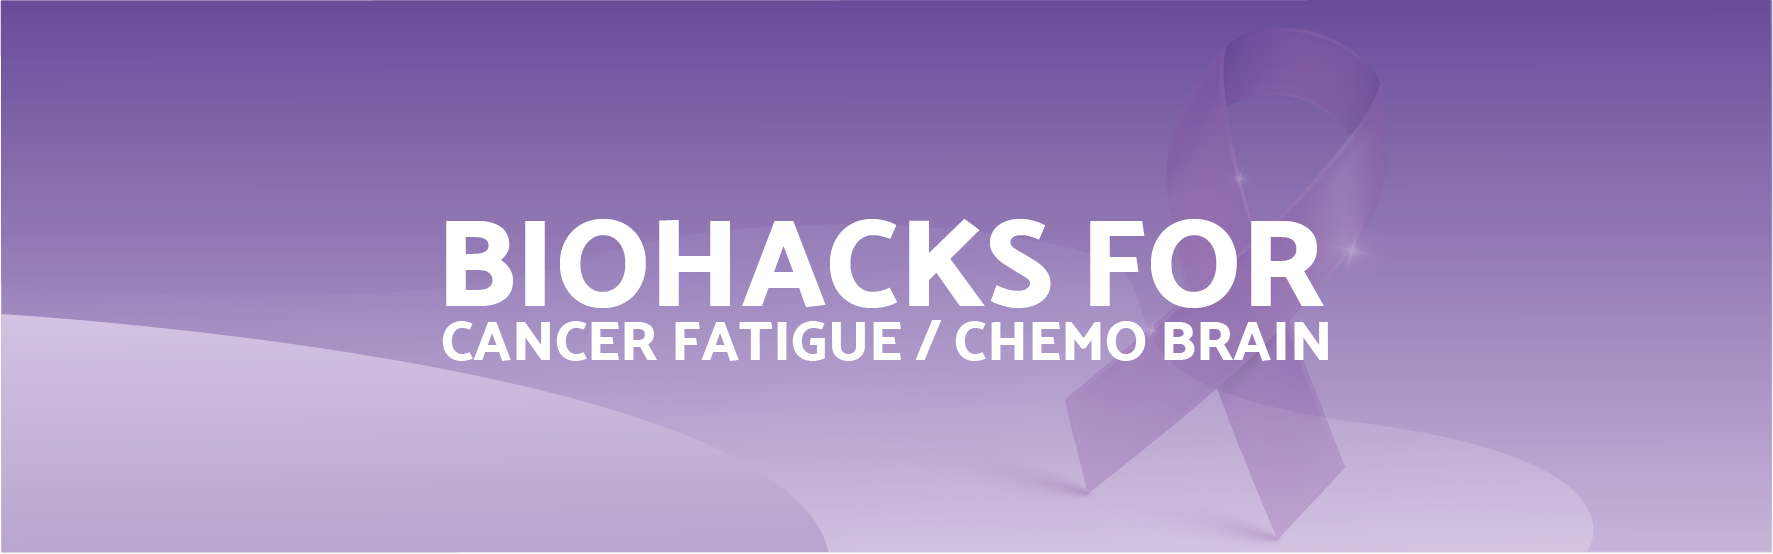 Biohacks For Cancer Fatigue & Chemo Brain